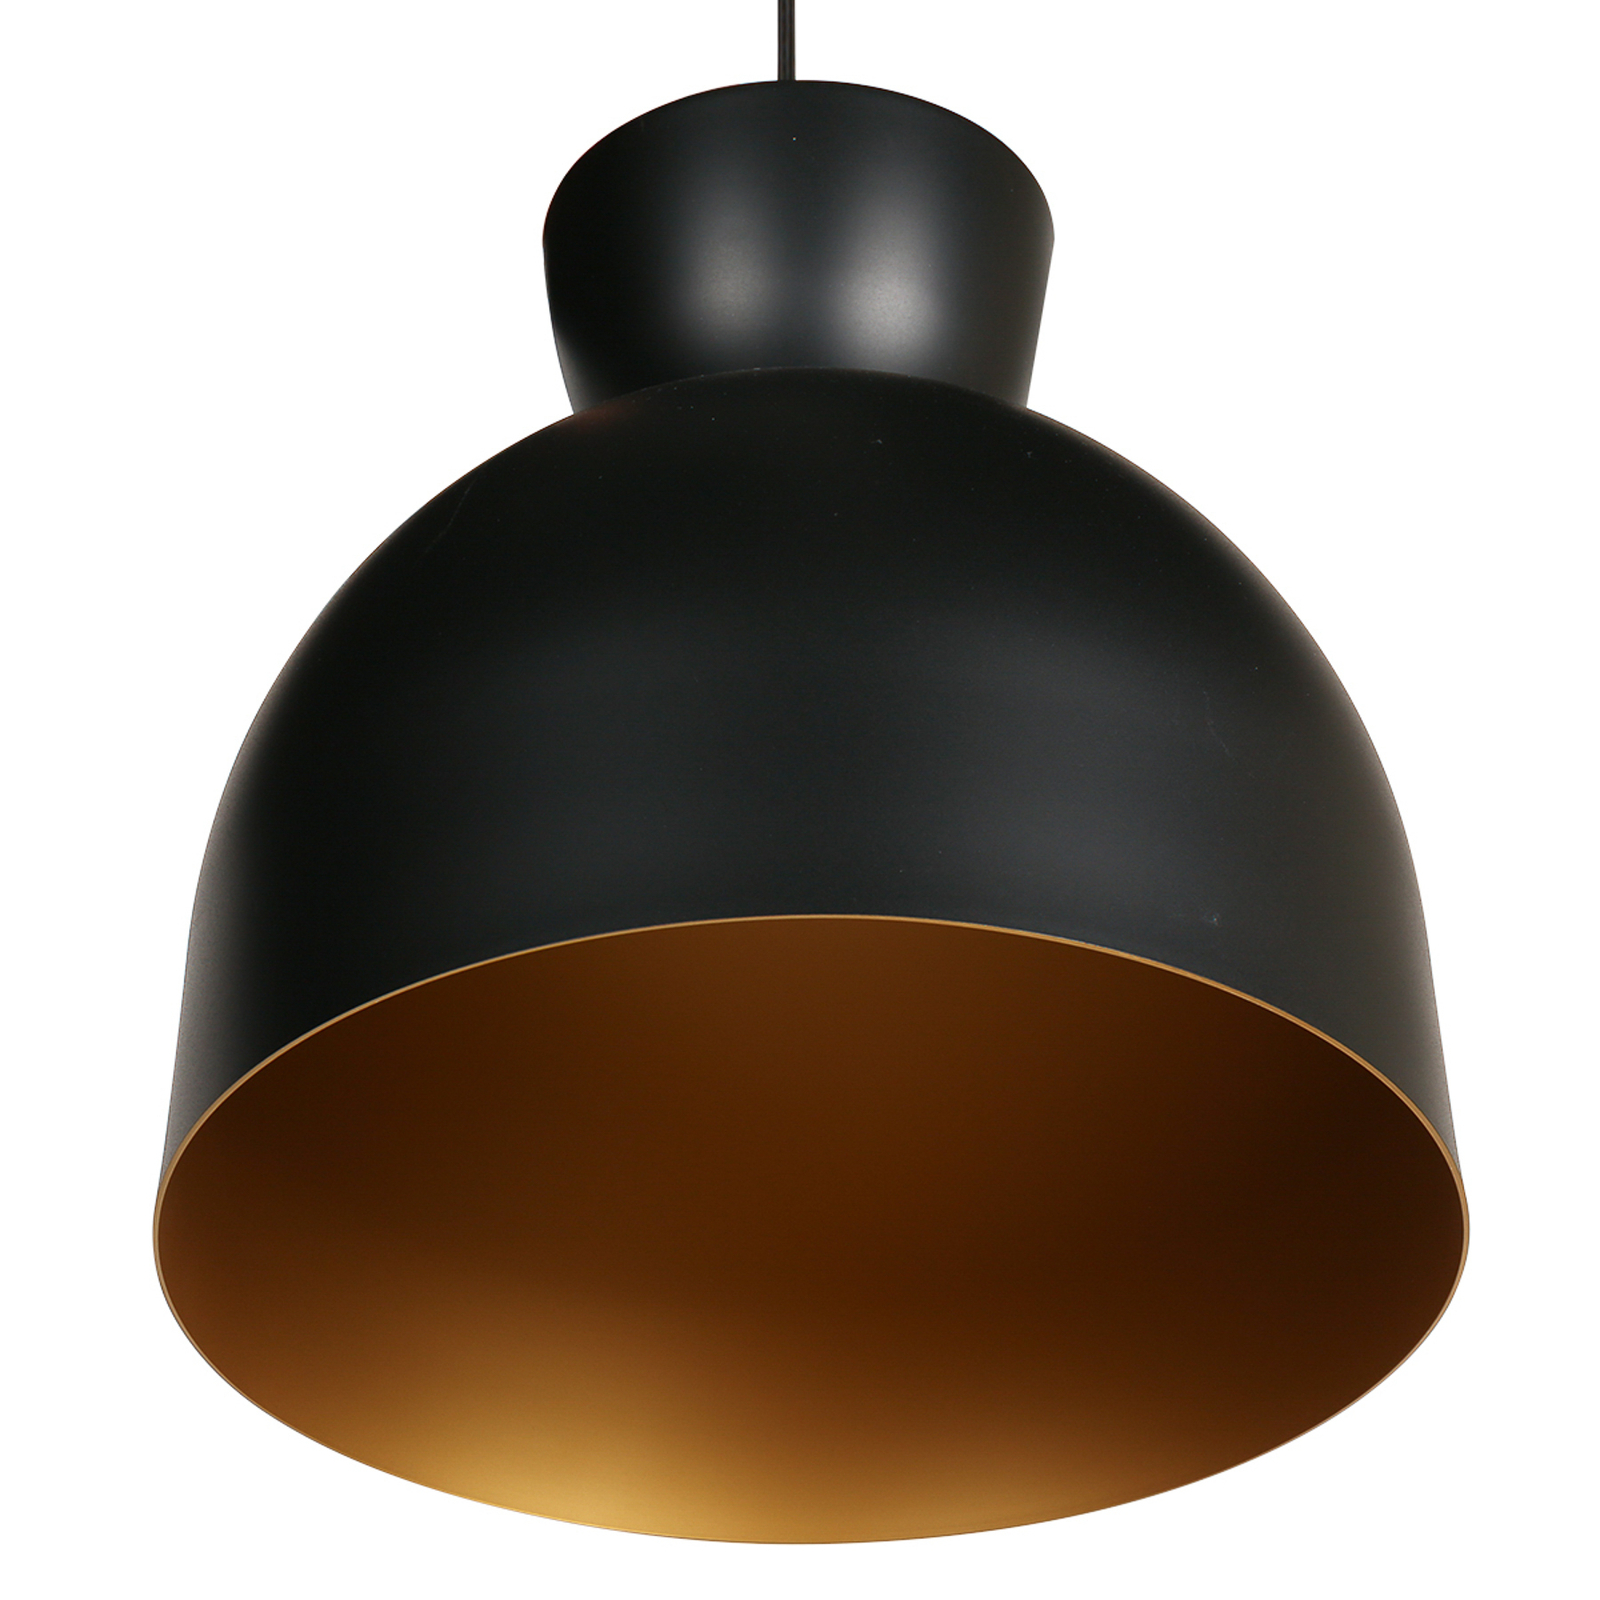 Skandina 3683ZW lámpara colgante, negro, metal, Ø 36,5 cm